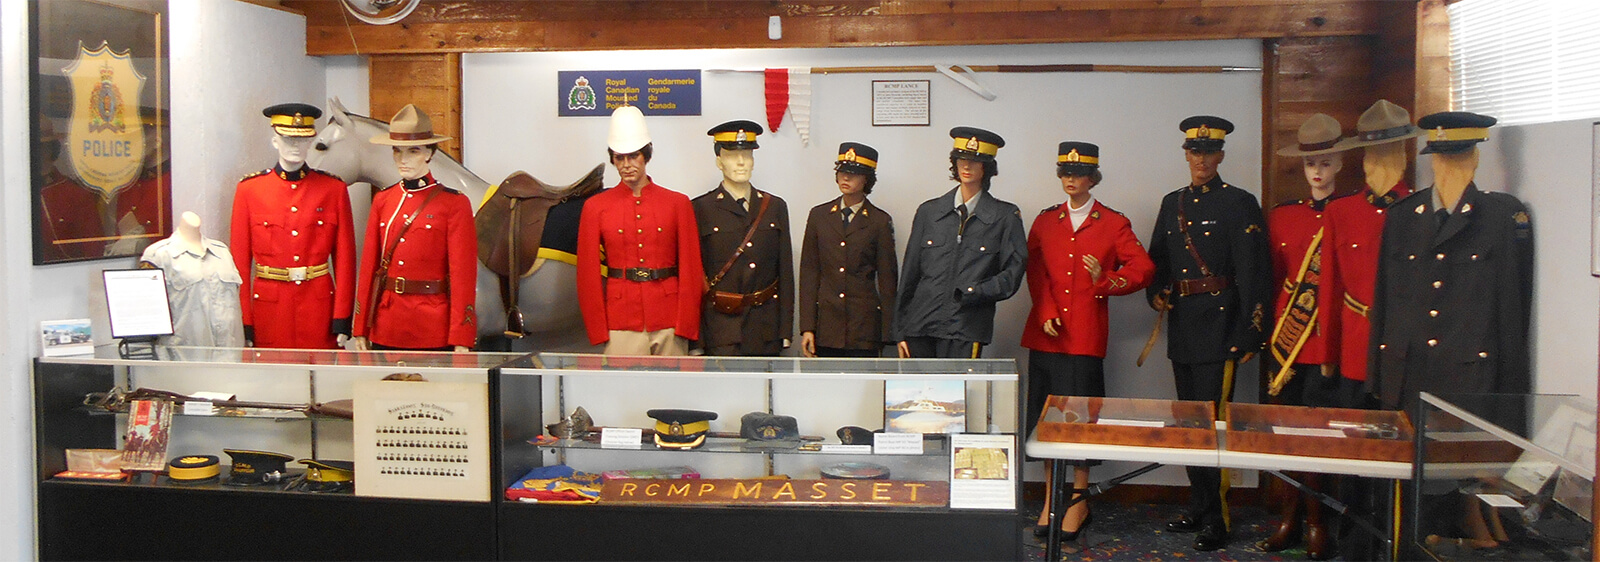 لباس افسران پلیس کانادا | تور لاکچری کانادا به همراه ویزای توریستی